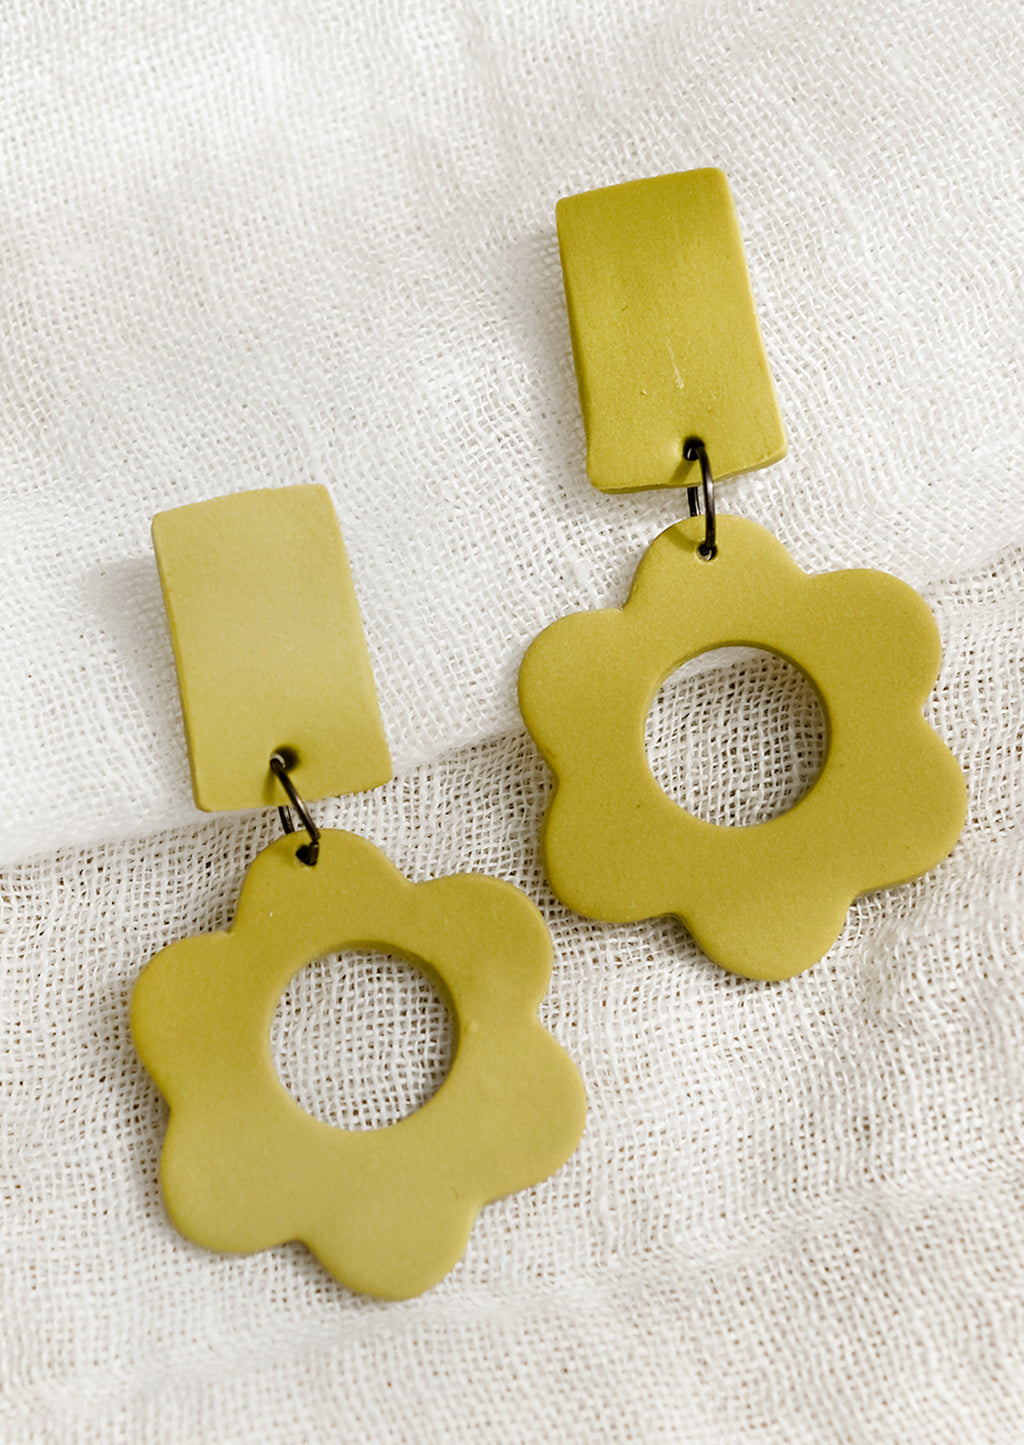 Split Pea: A pair of clay flower earrings with bar-shape post back in split pea.